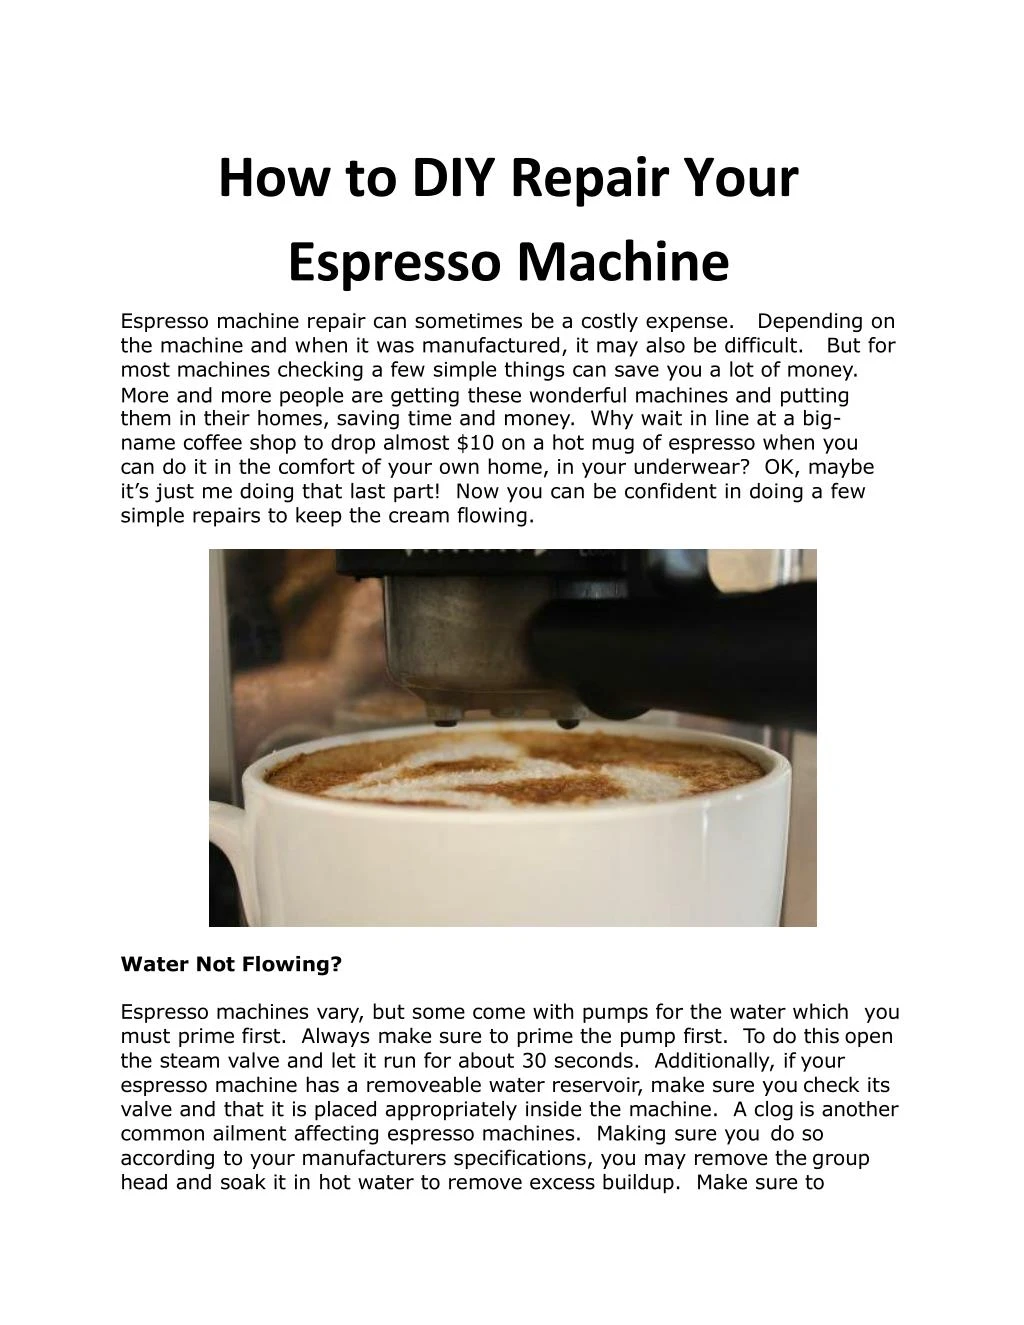 how to di y repair your espresso machine